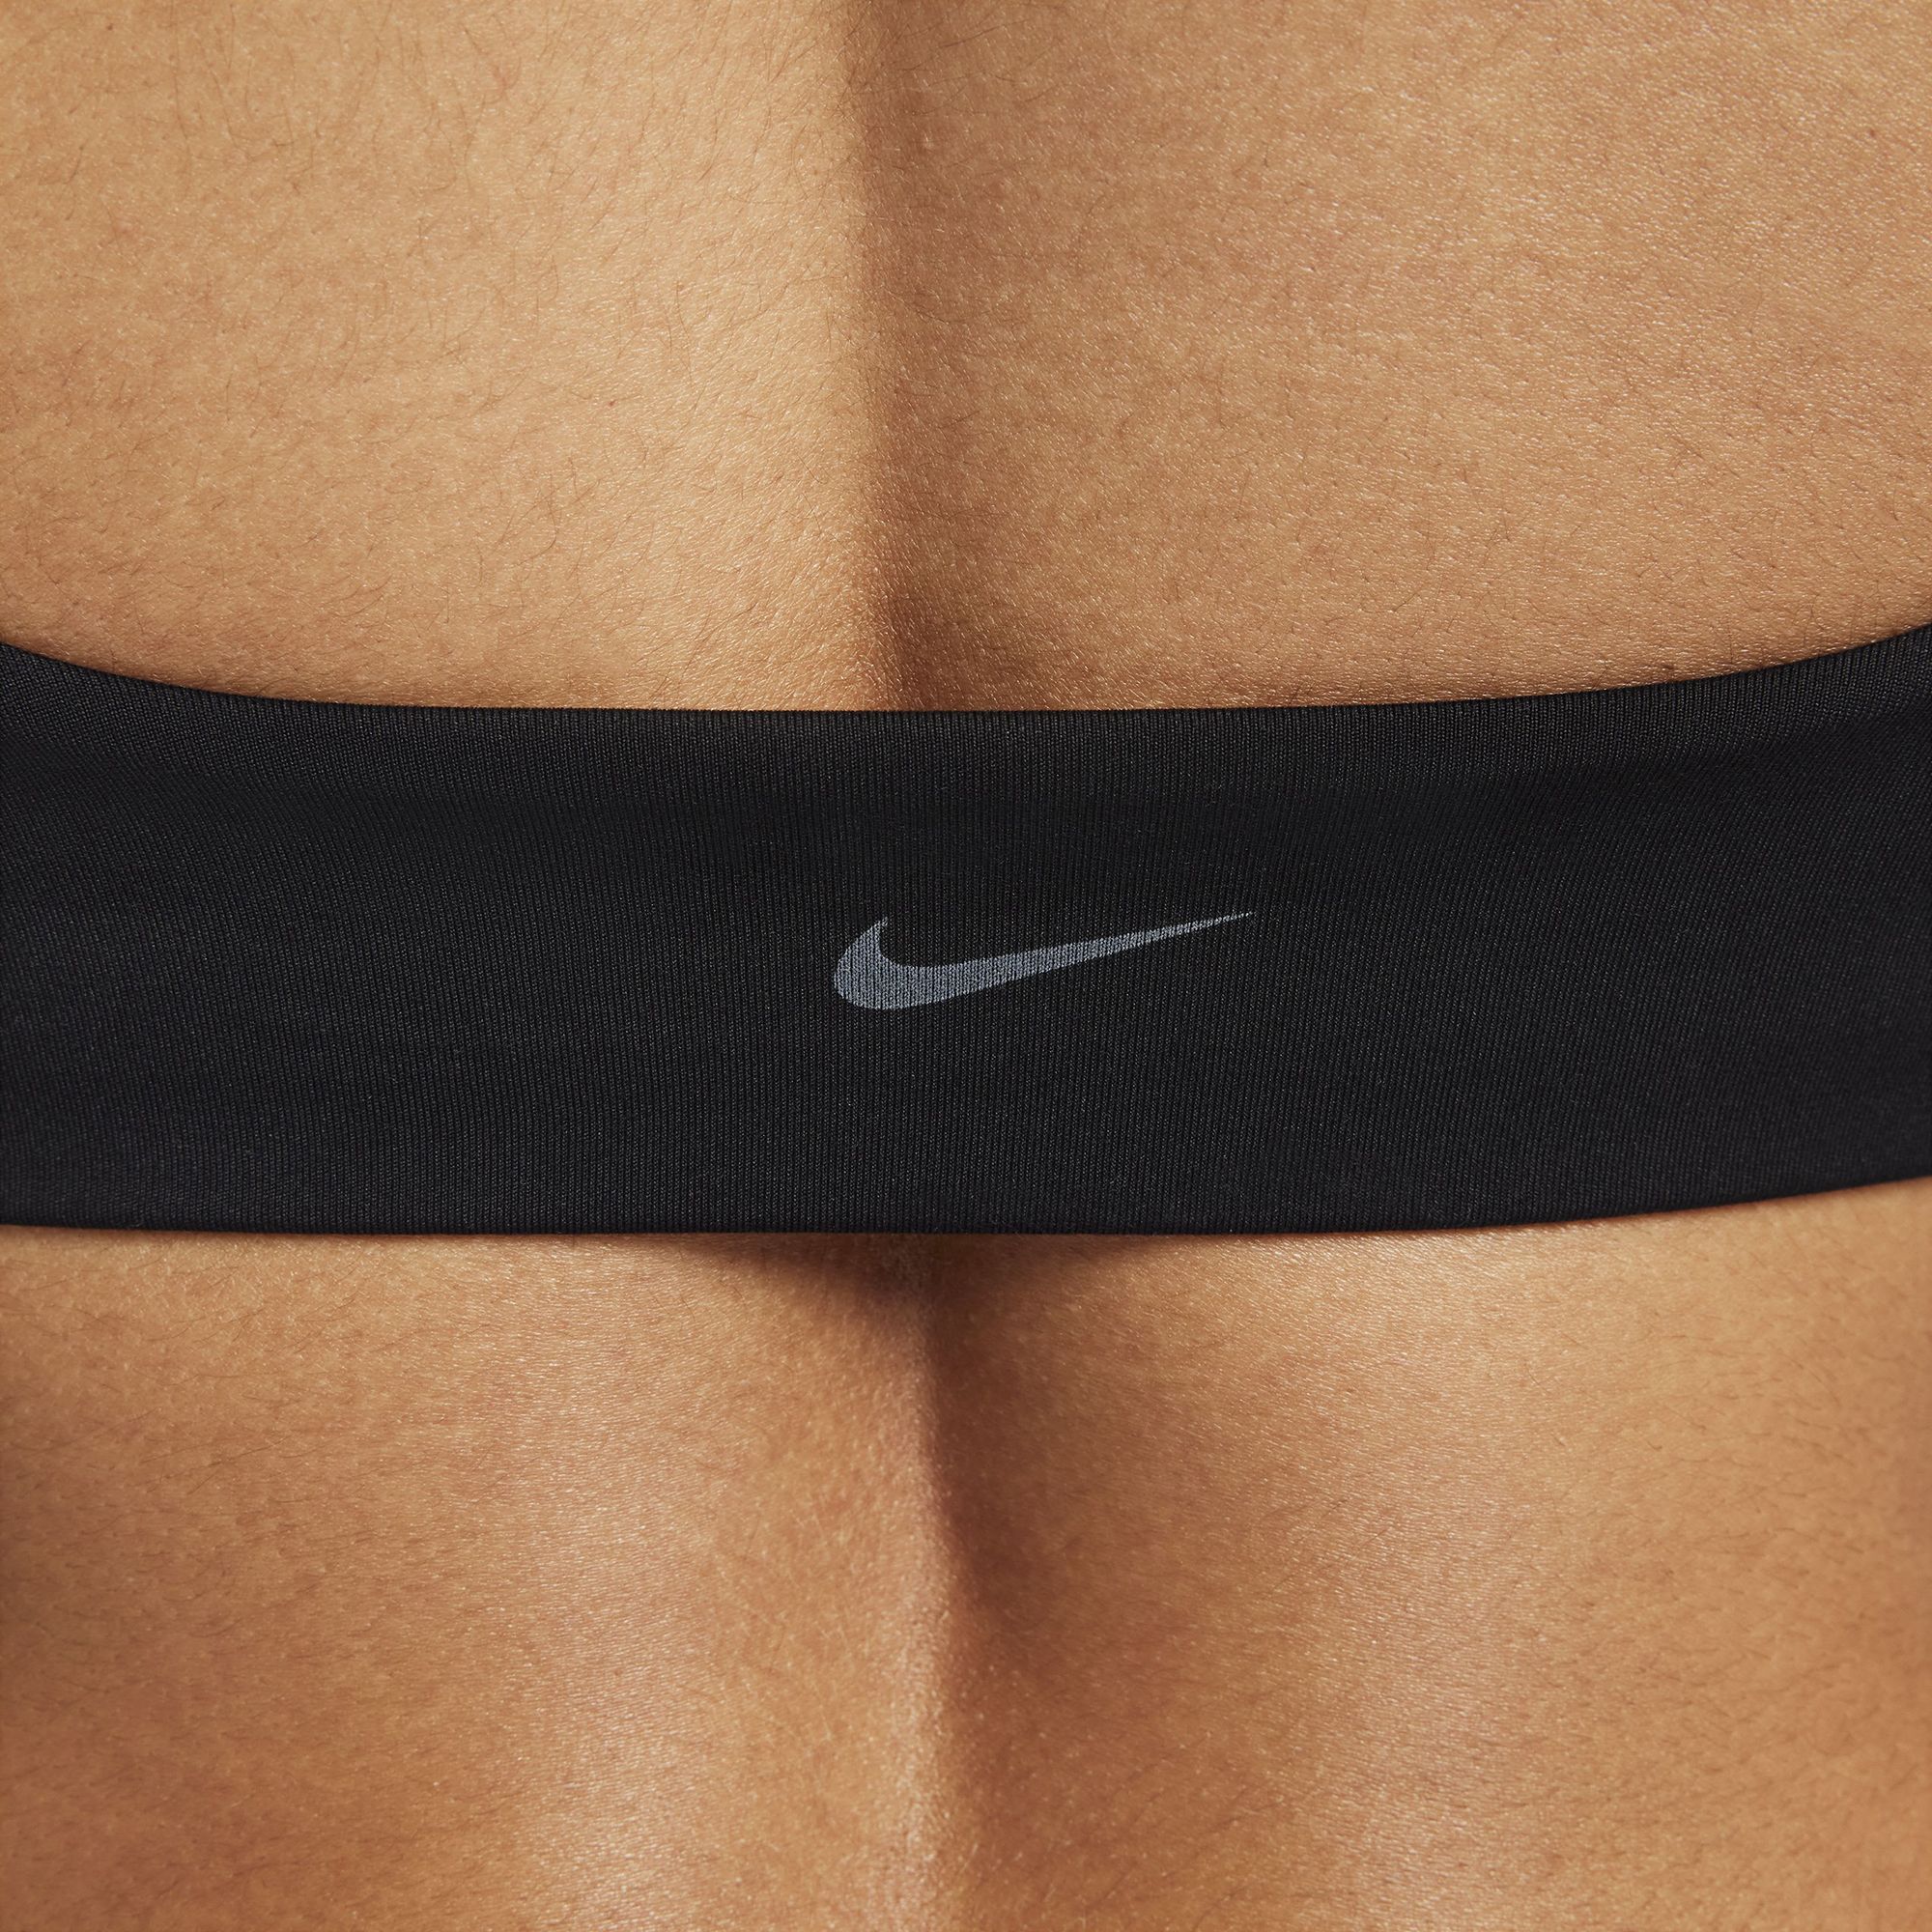 Nike Women's One Medium-Support Lightly Lined Sports Bra